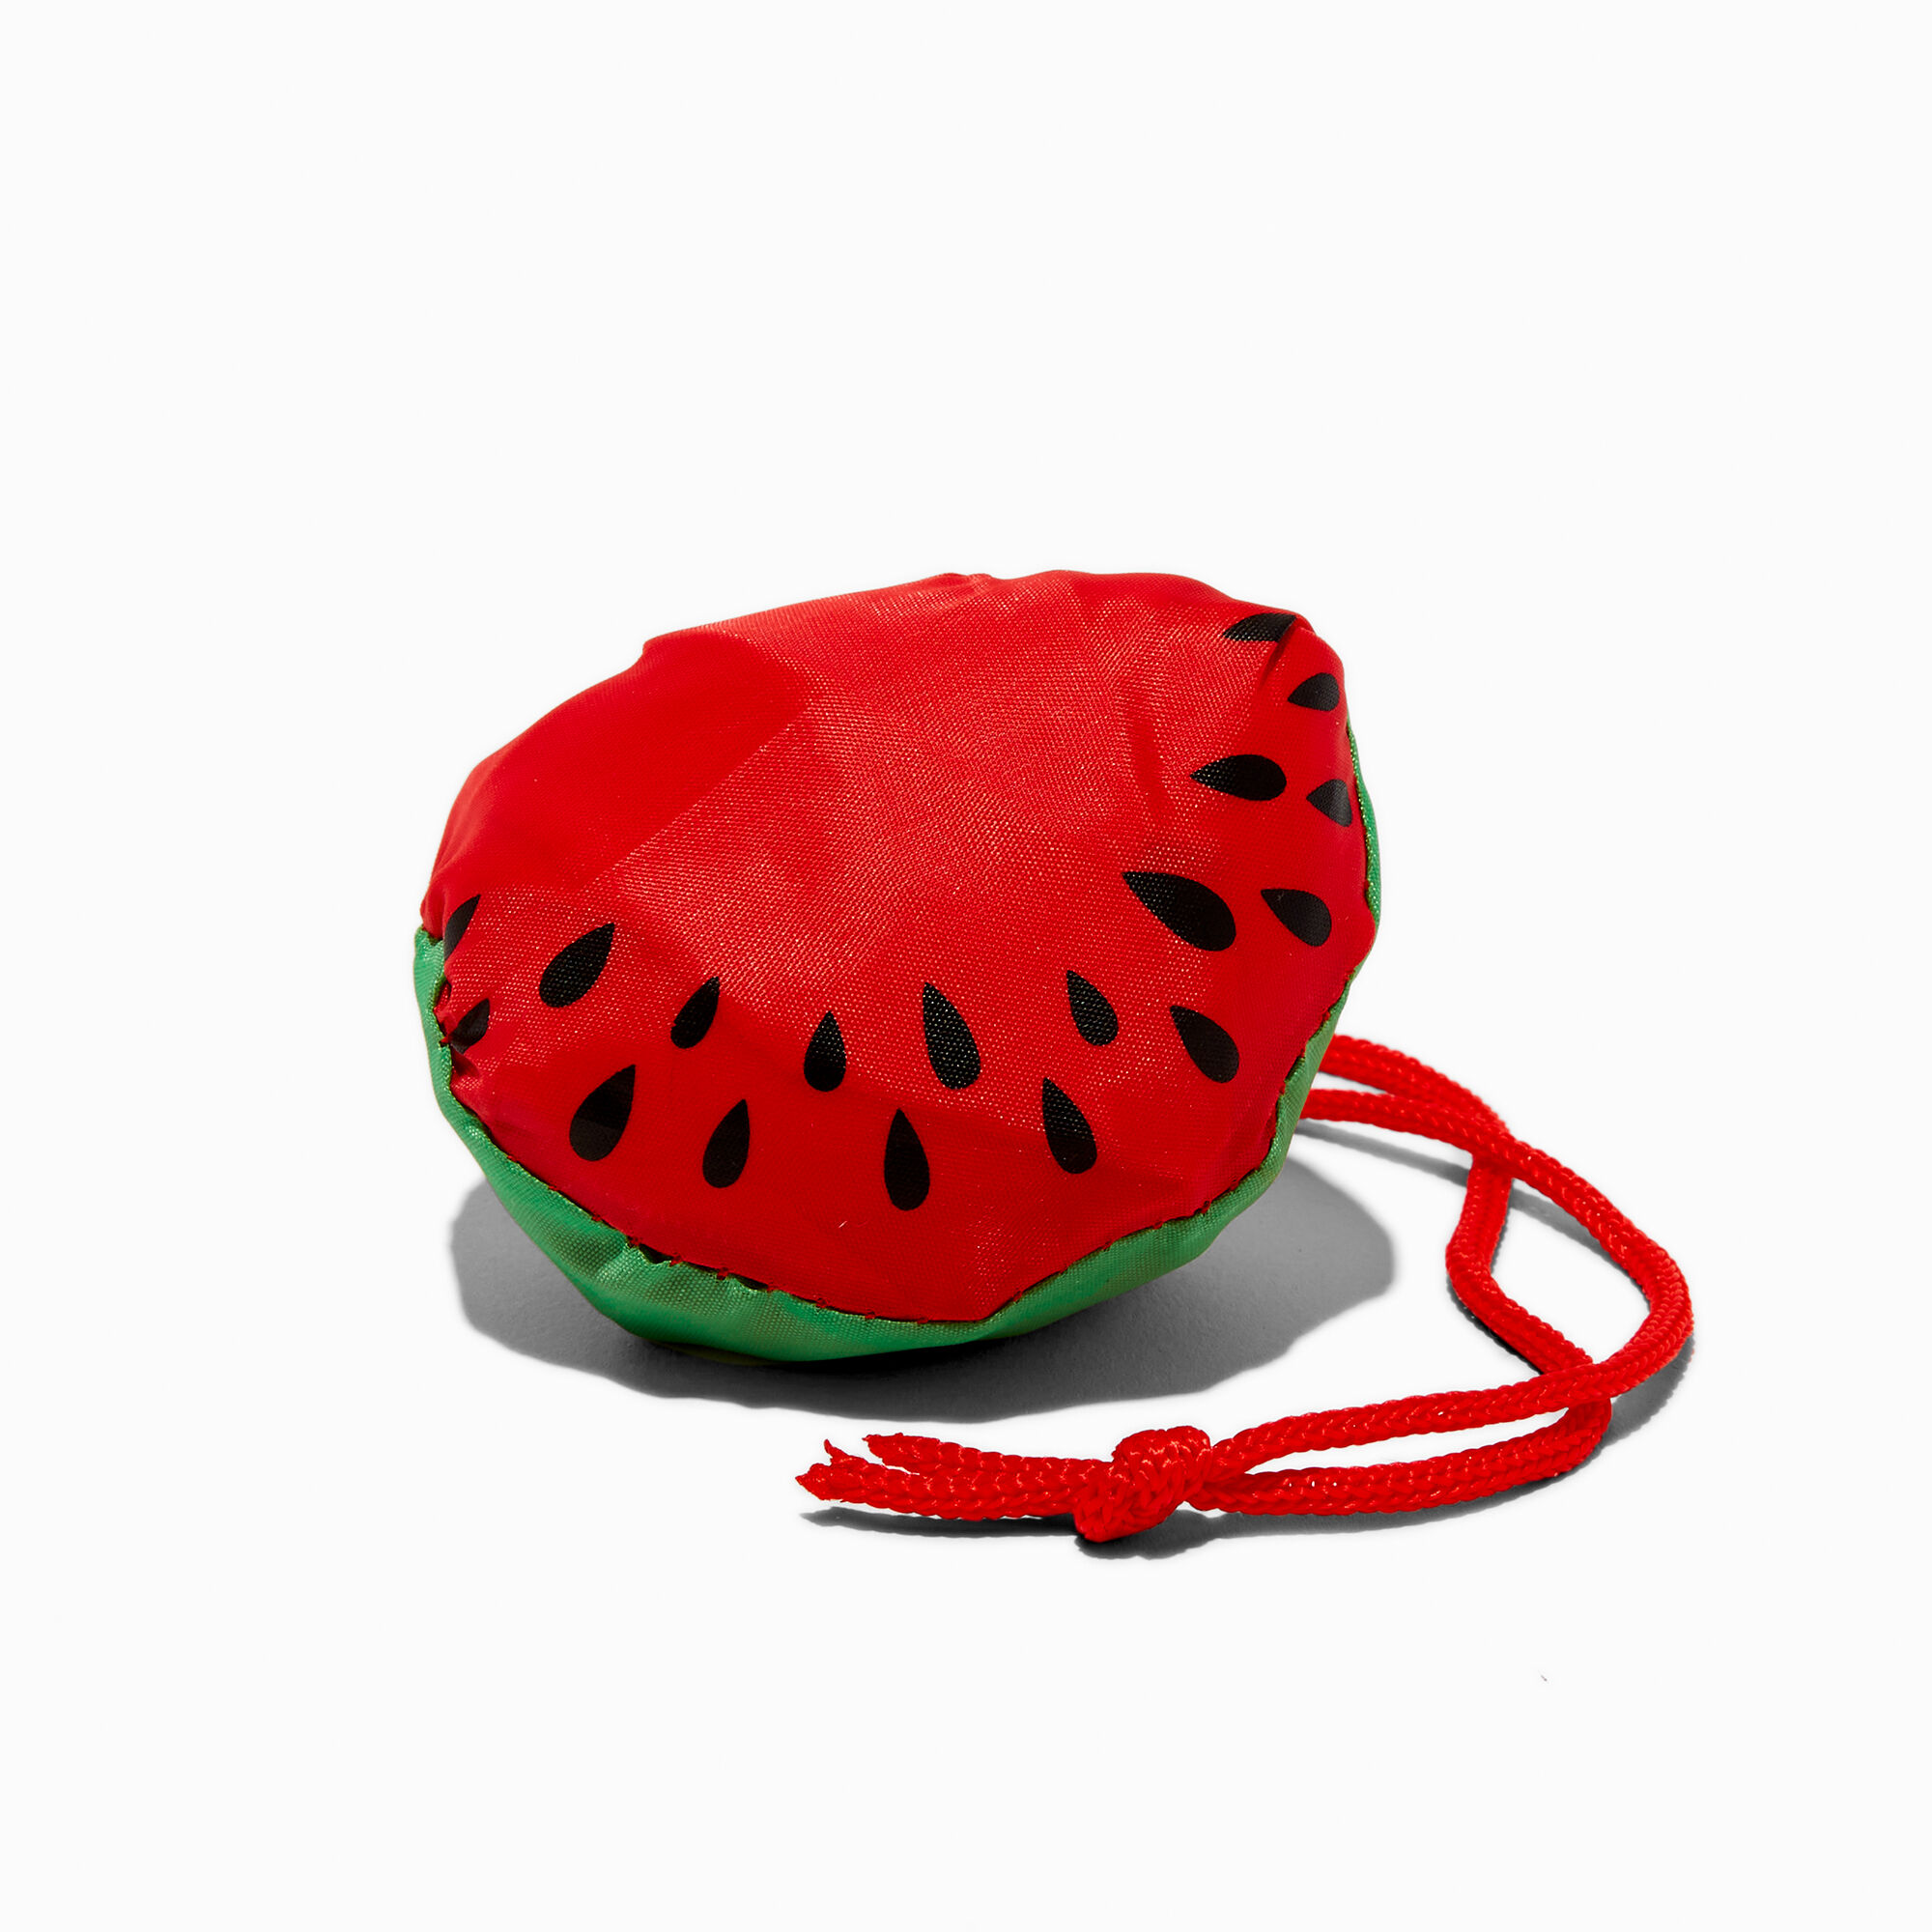 View Claires Watermelon Reusable Foldable Tote Bag information